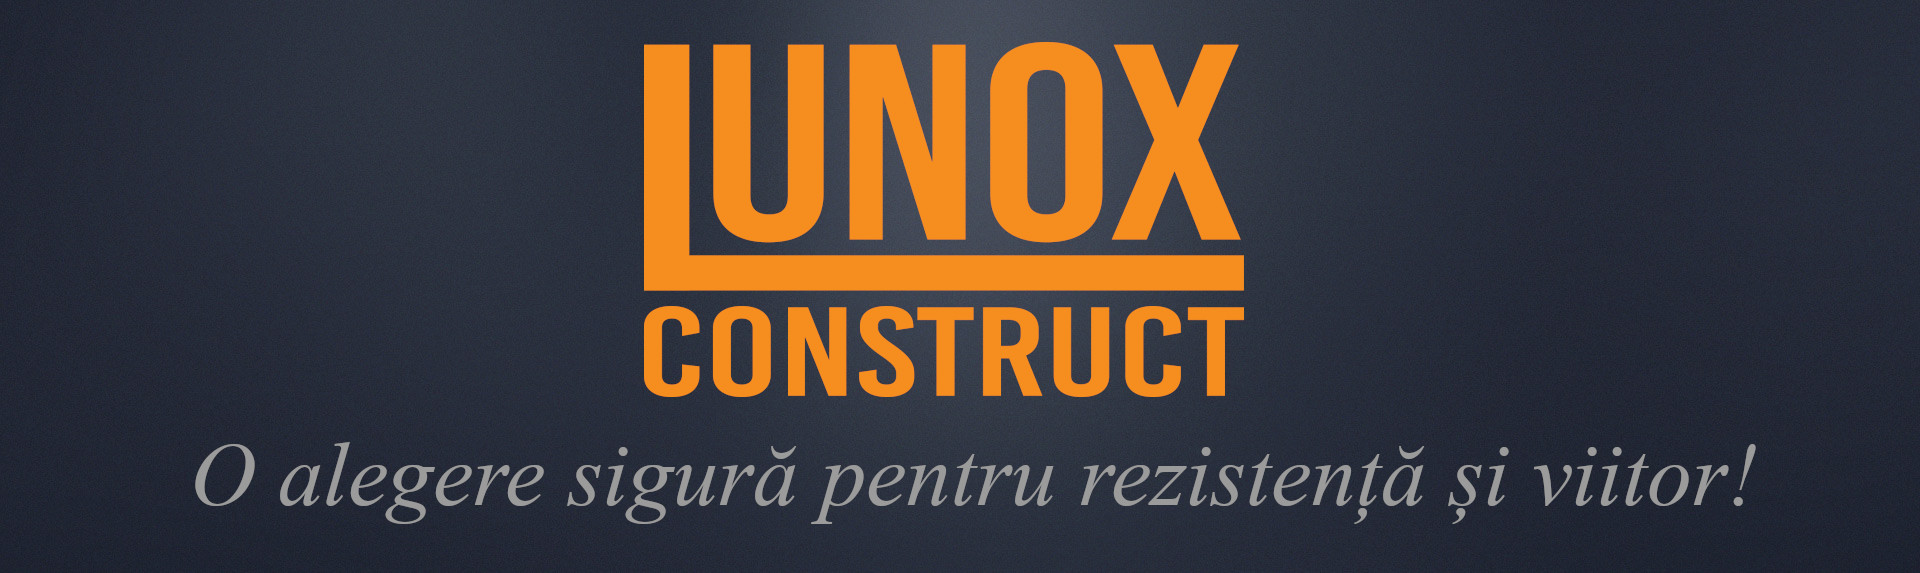 banner-lunox-construct